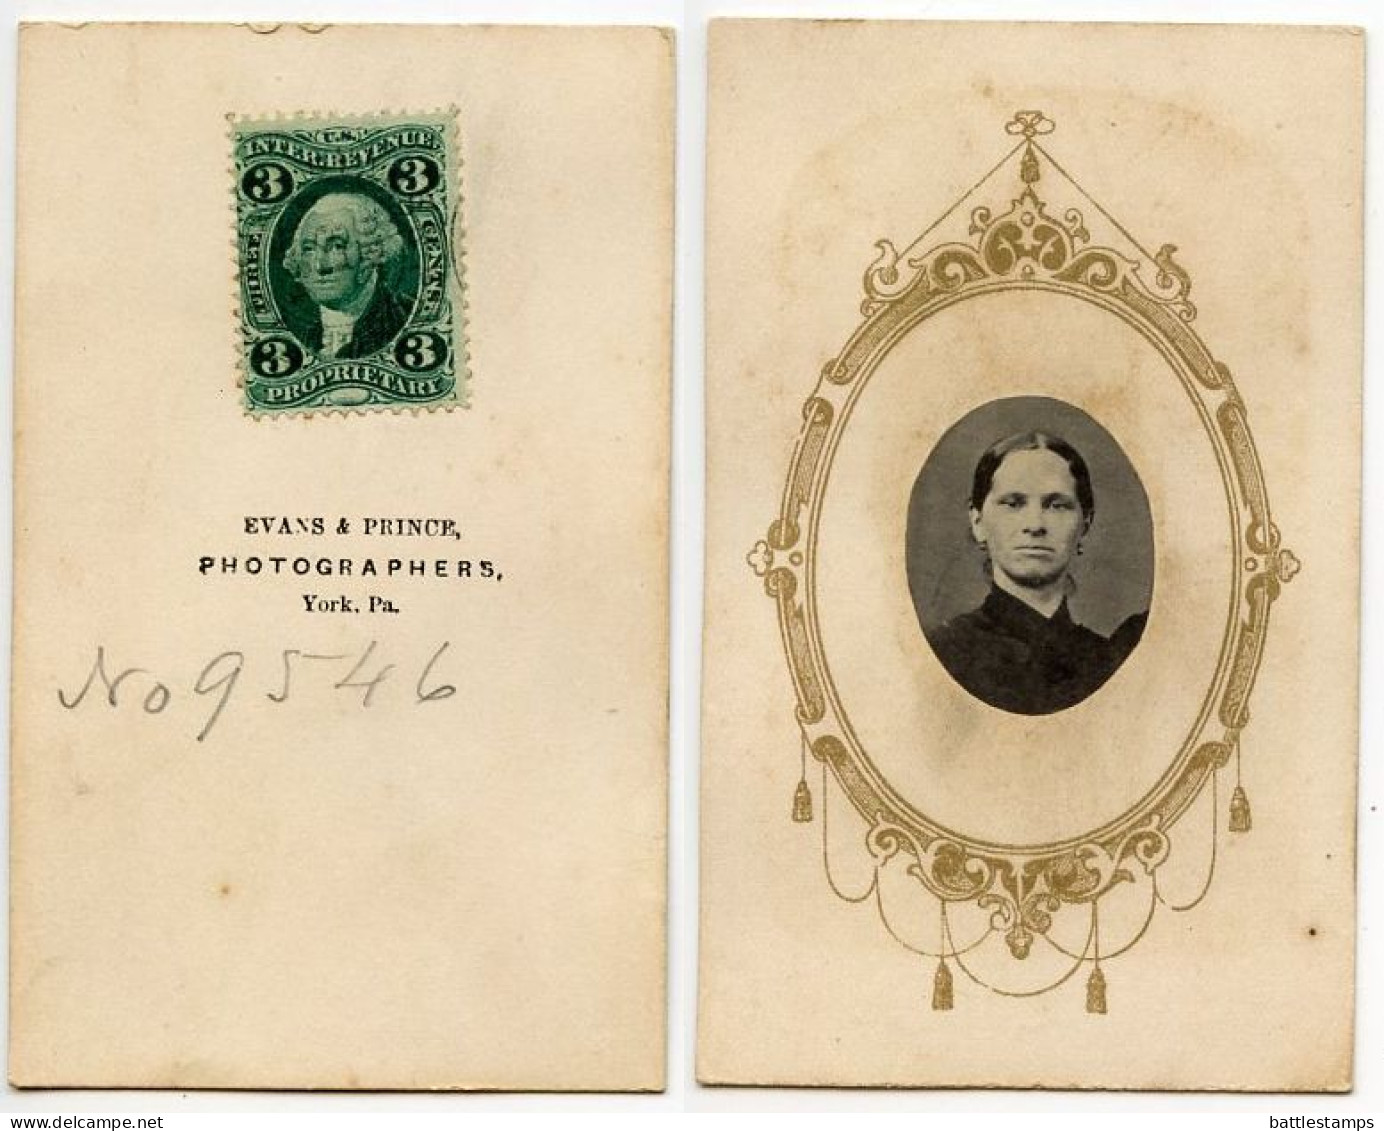 United States 1860‘s Photograph, Woman - Evans & Prince, York, Pennsylvania - Scott R18c Revenue Stamp - Steuermarken